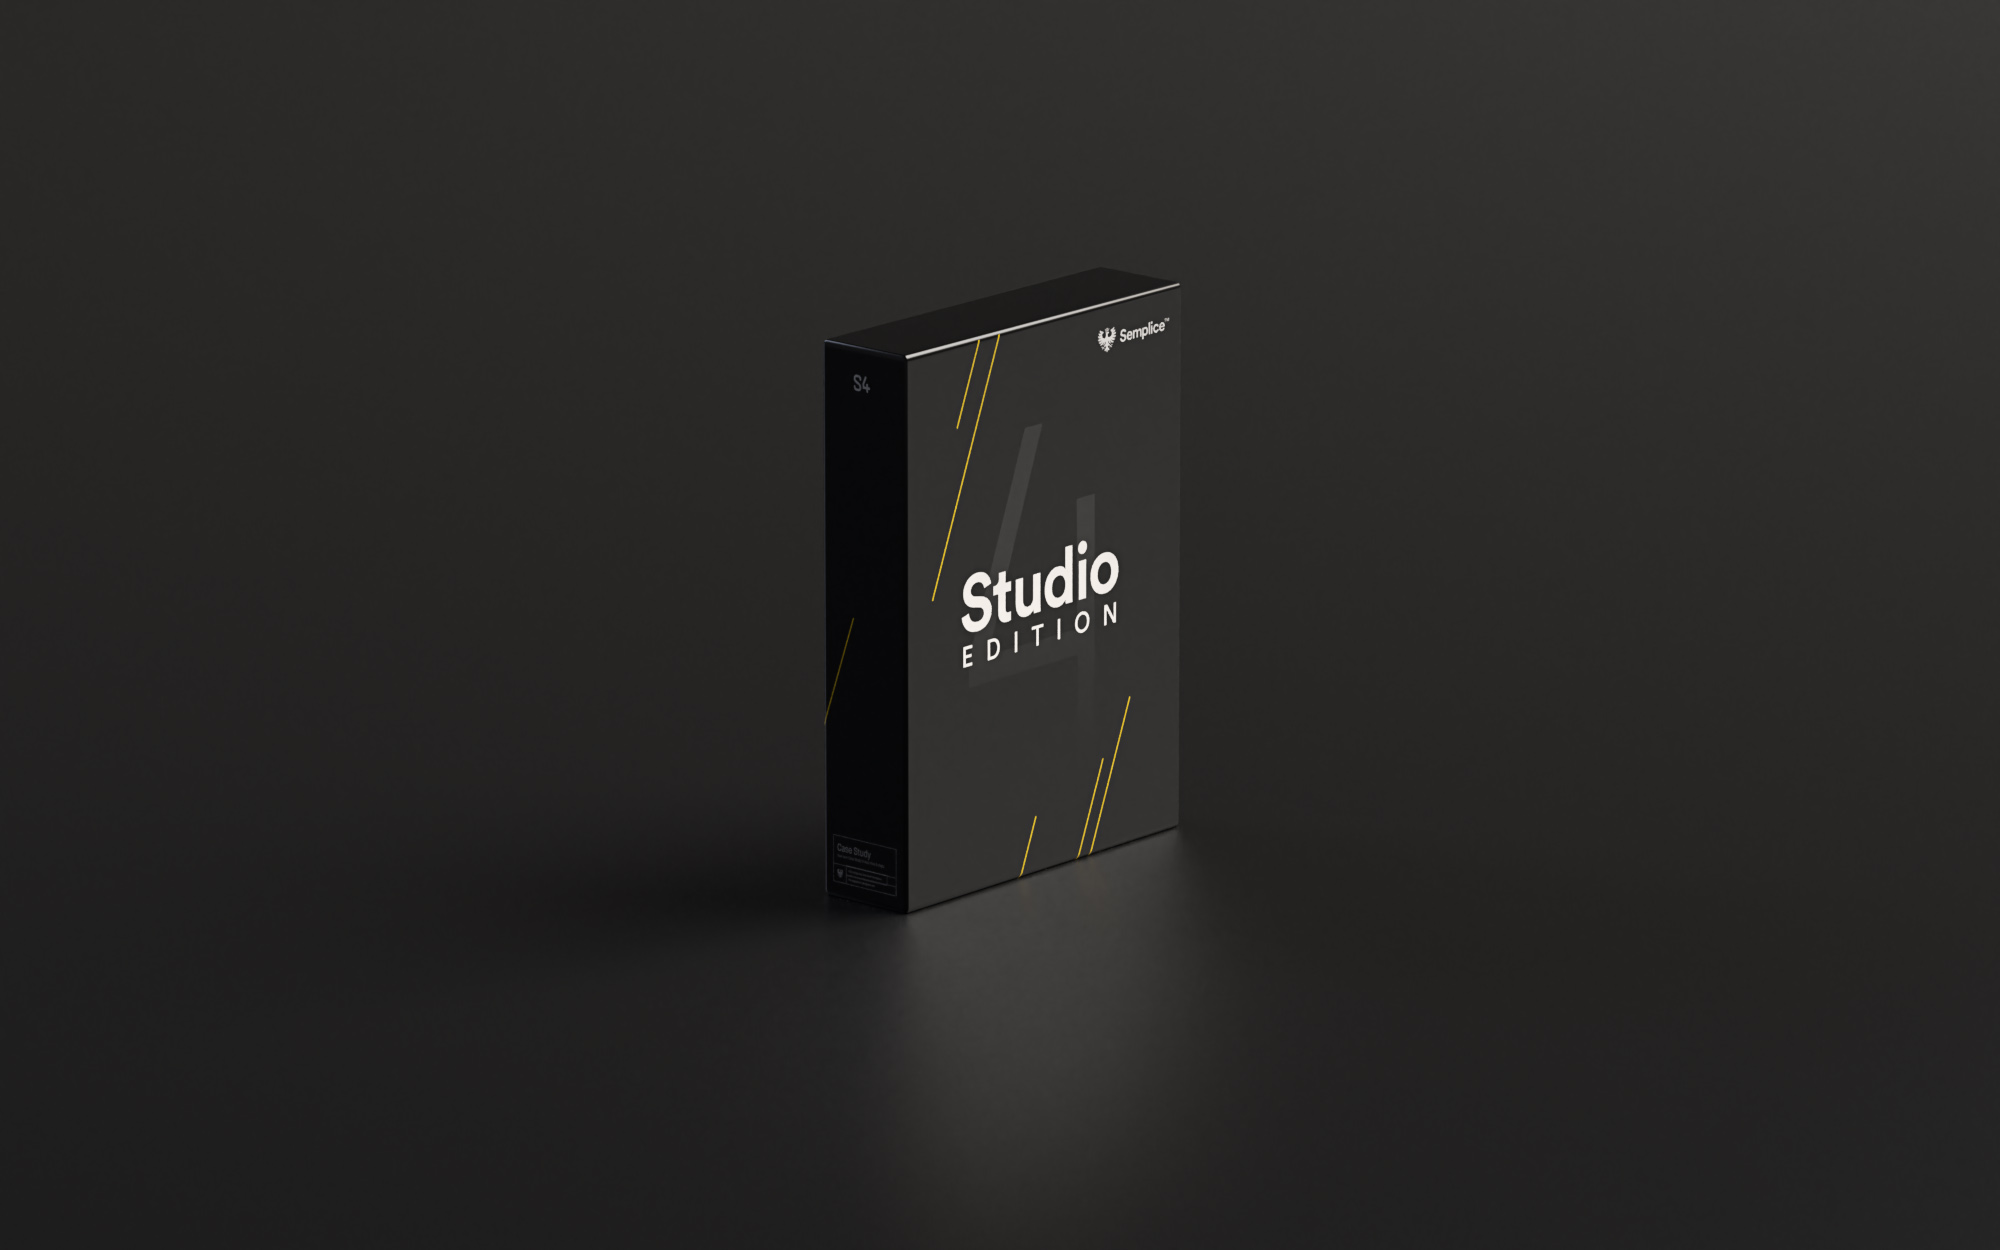 Rendered image of Semplice Studio box art using Adobe Dimension